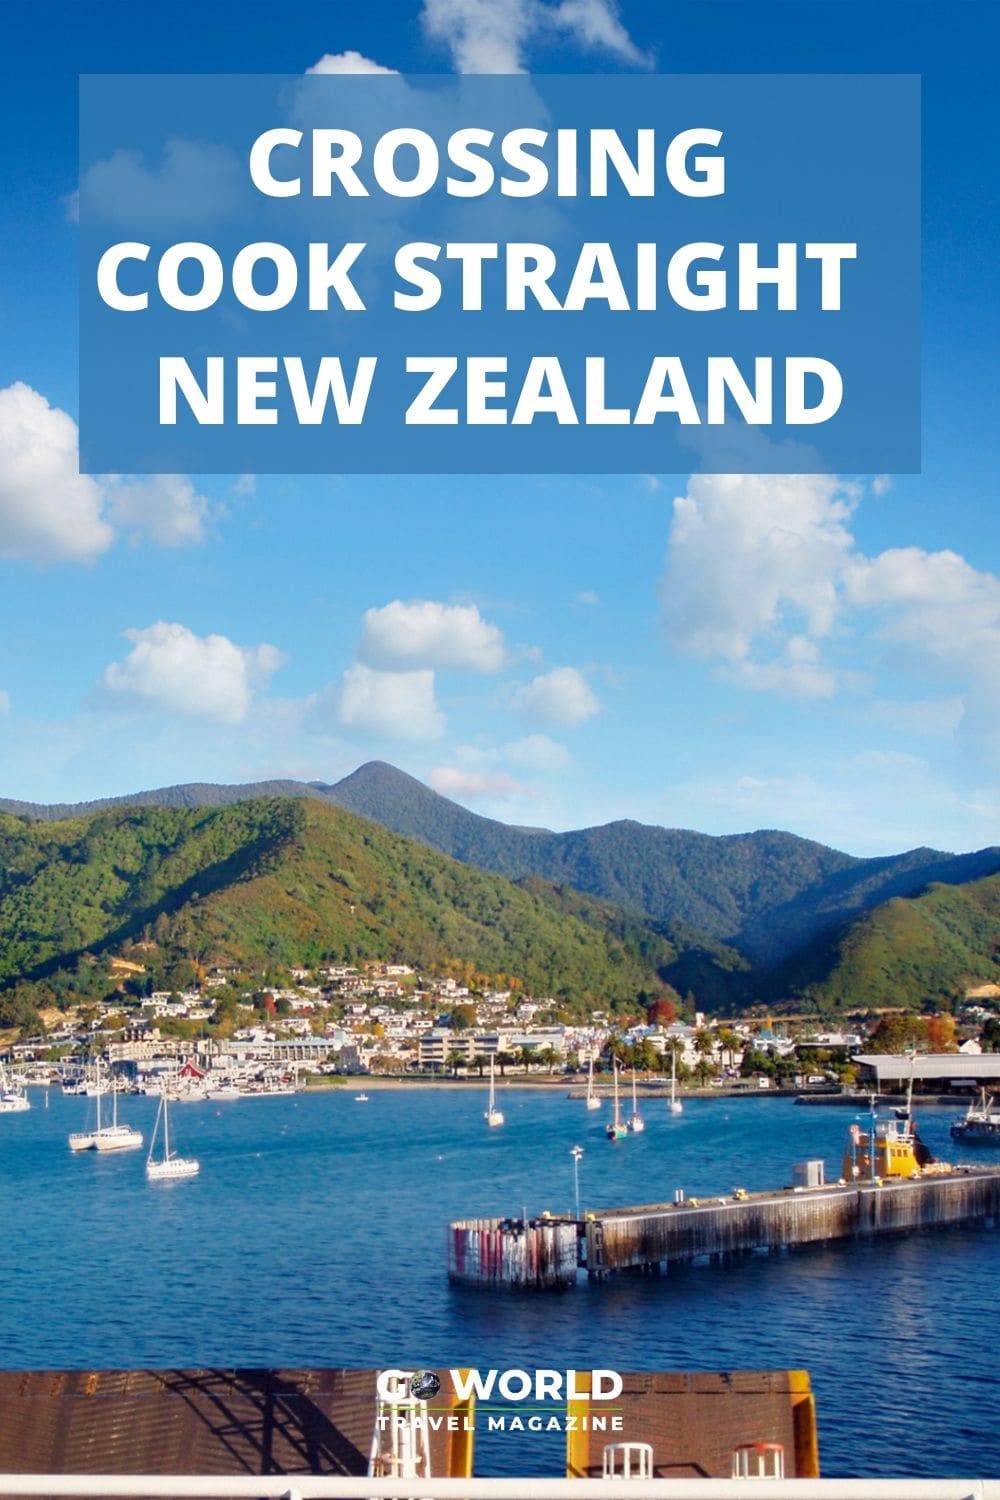 Feri Inter Islander, NZ yang melintasi Cook Straight dari Wellington ke Picton adalah salah satu Perjalanan Hebat NZ.  Inilah yang diharapkan.  #interislandernz #newzealand